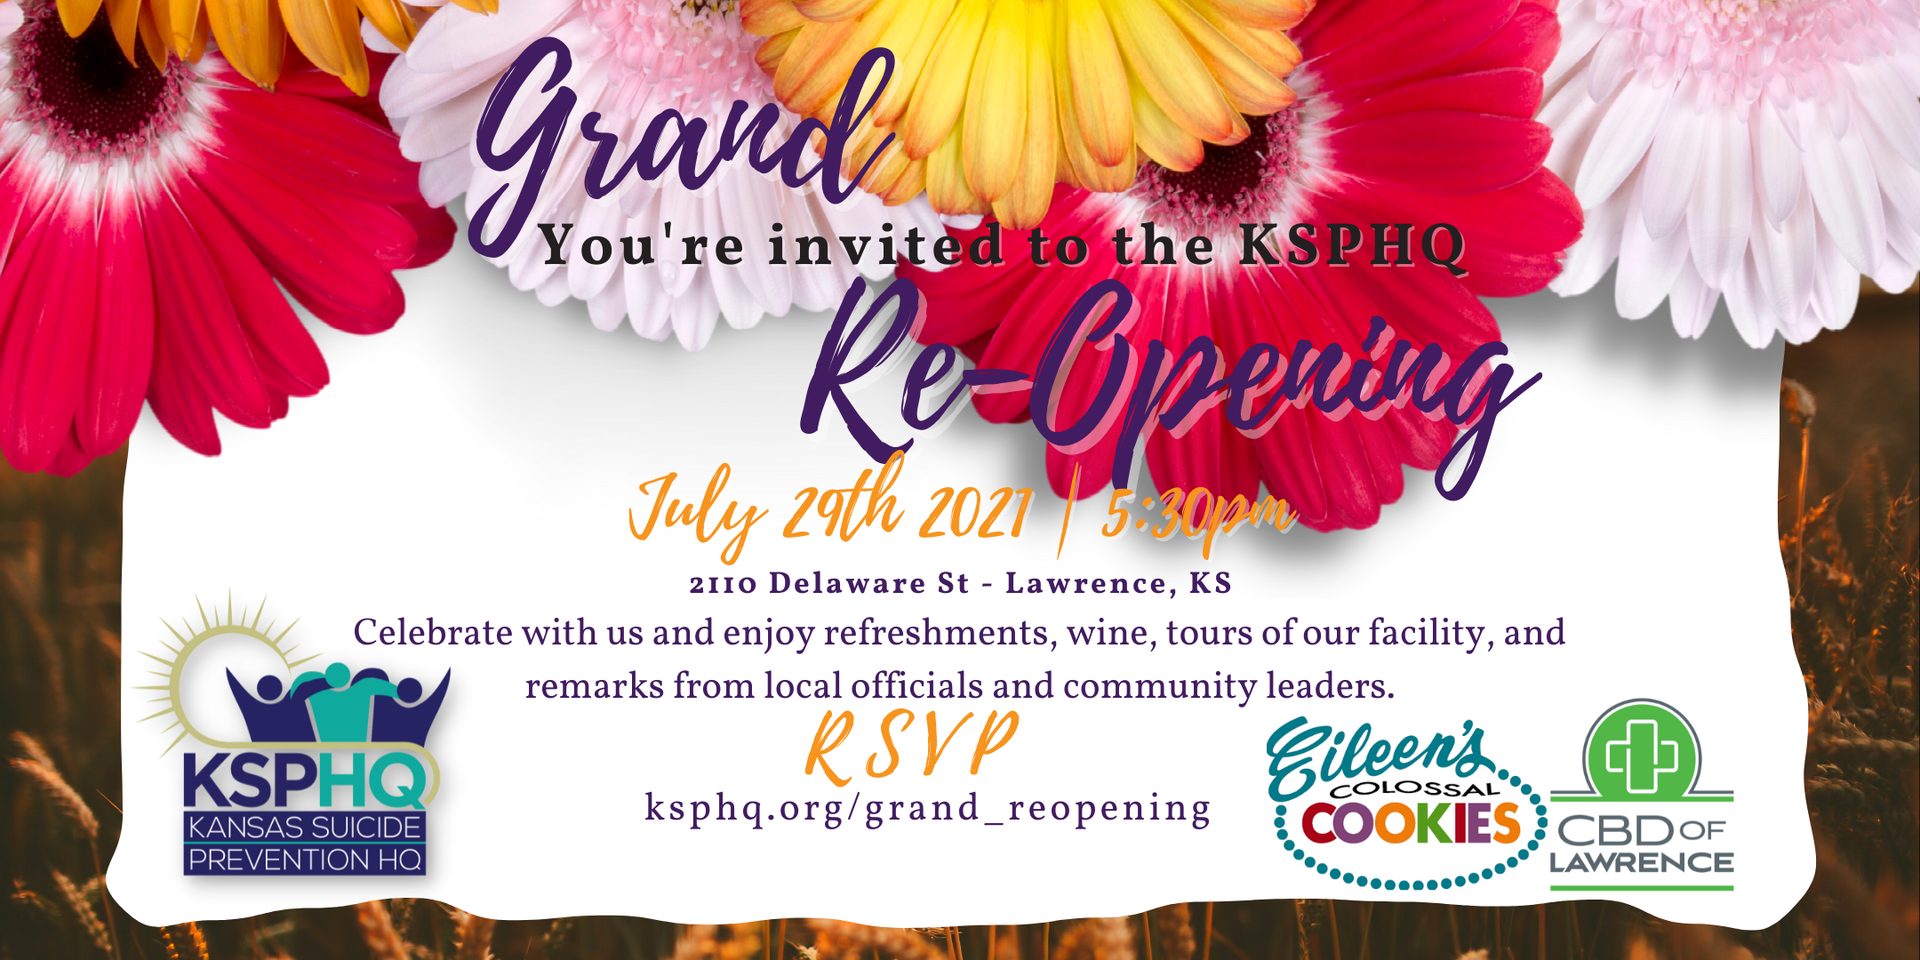 KSPHQ Grand Re-Opening Invite Image